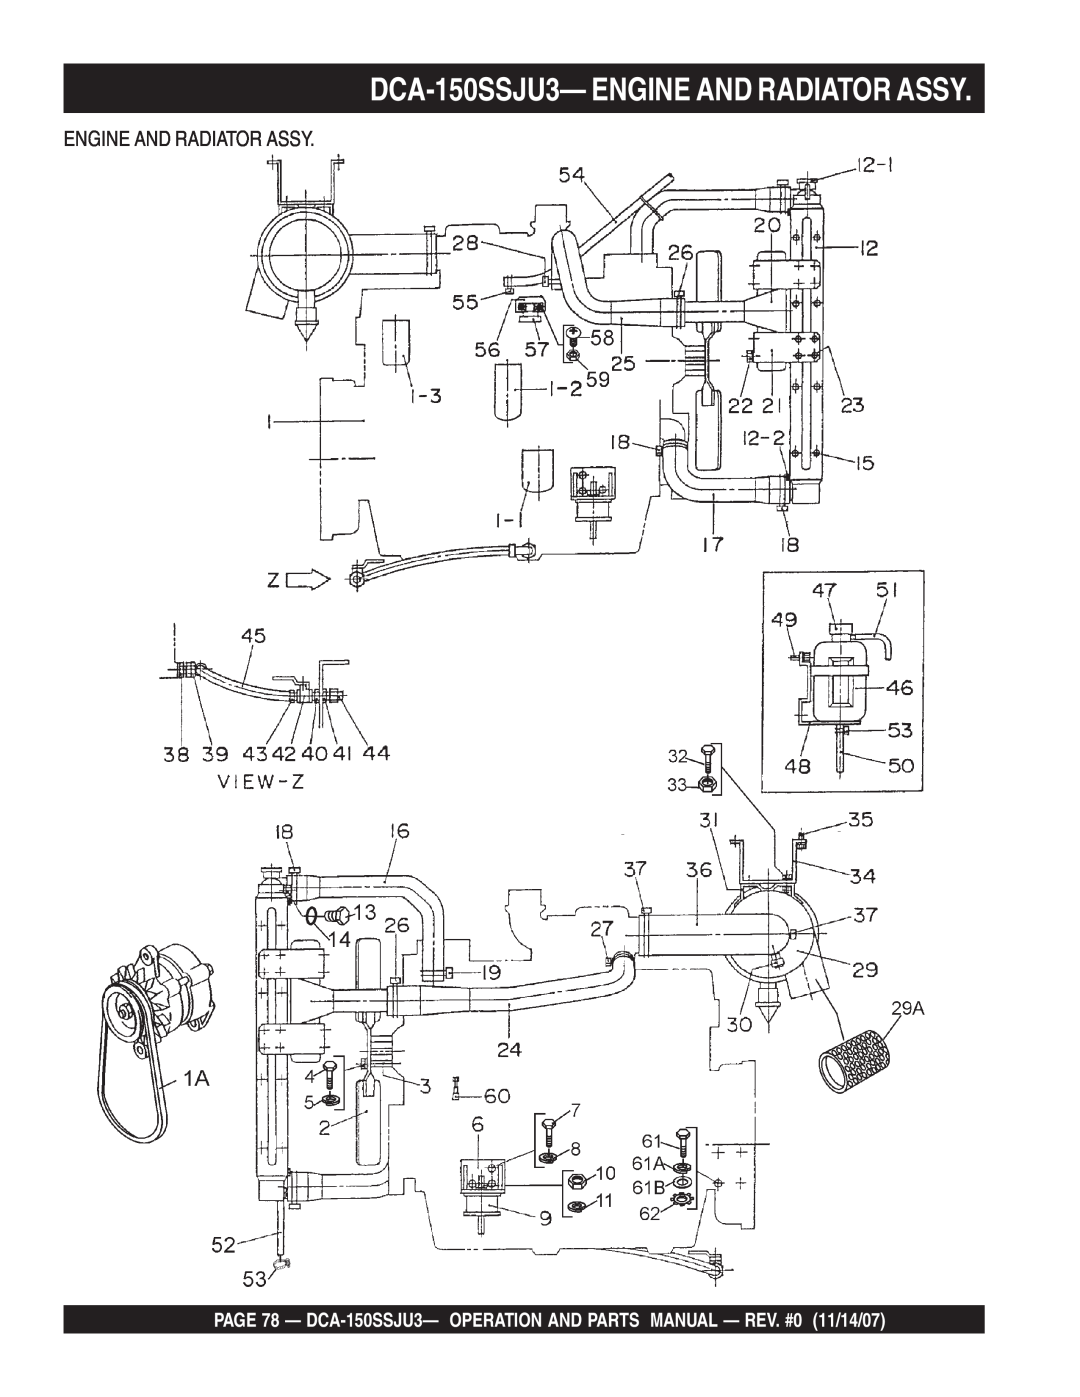 Multiquip operation manual DCA-150SSJU3—ENGINE AND RADIATOR ASSY, Engine And Radiator Assy 